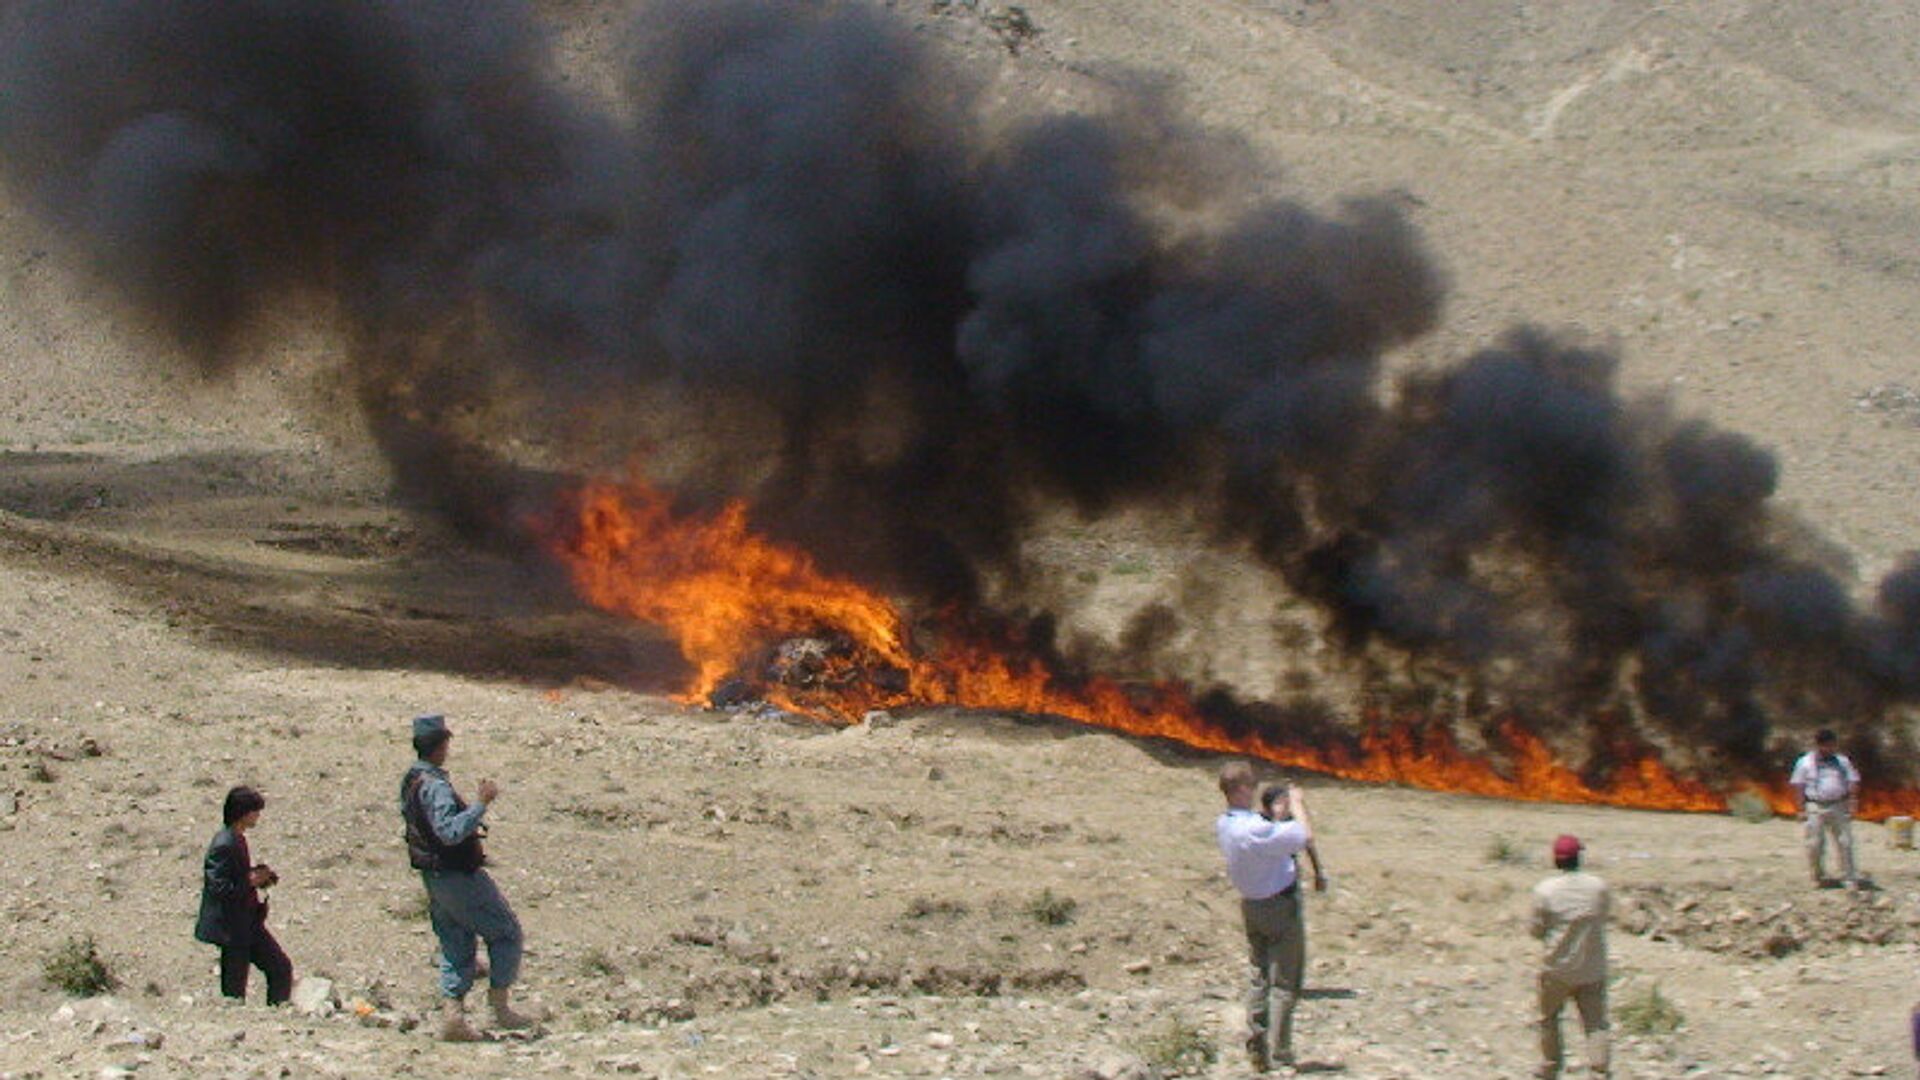 Сожжение 11 тонн наркотиков в провинции Кабул в Афганистане  - РИА Новости, 1920, 17.08.2021